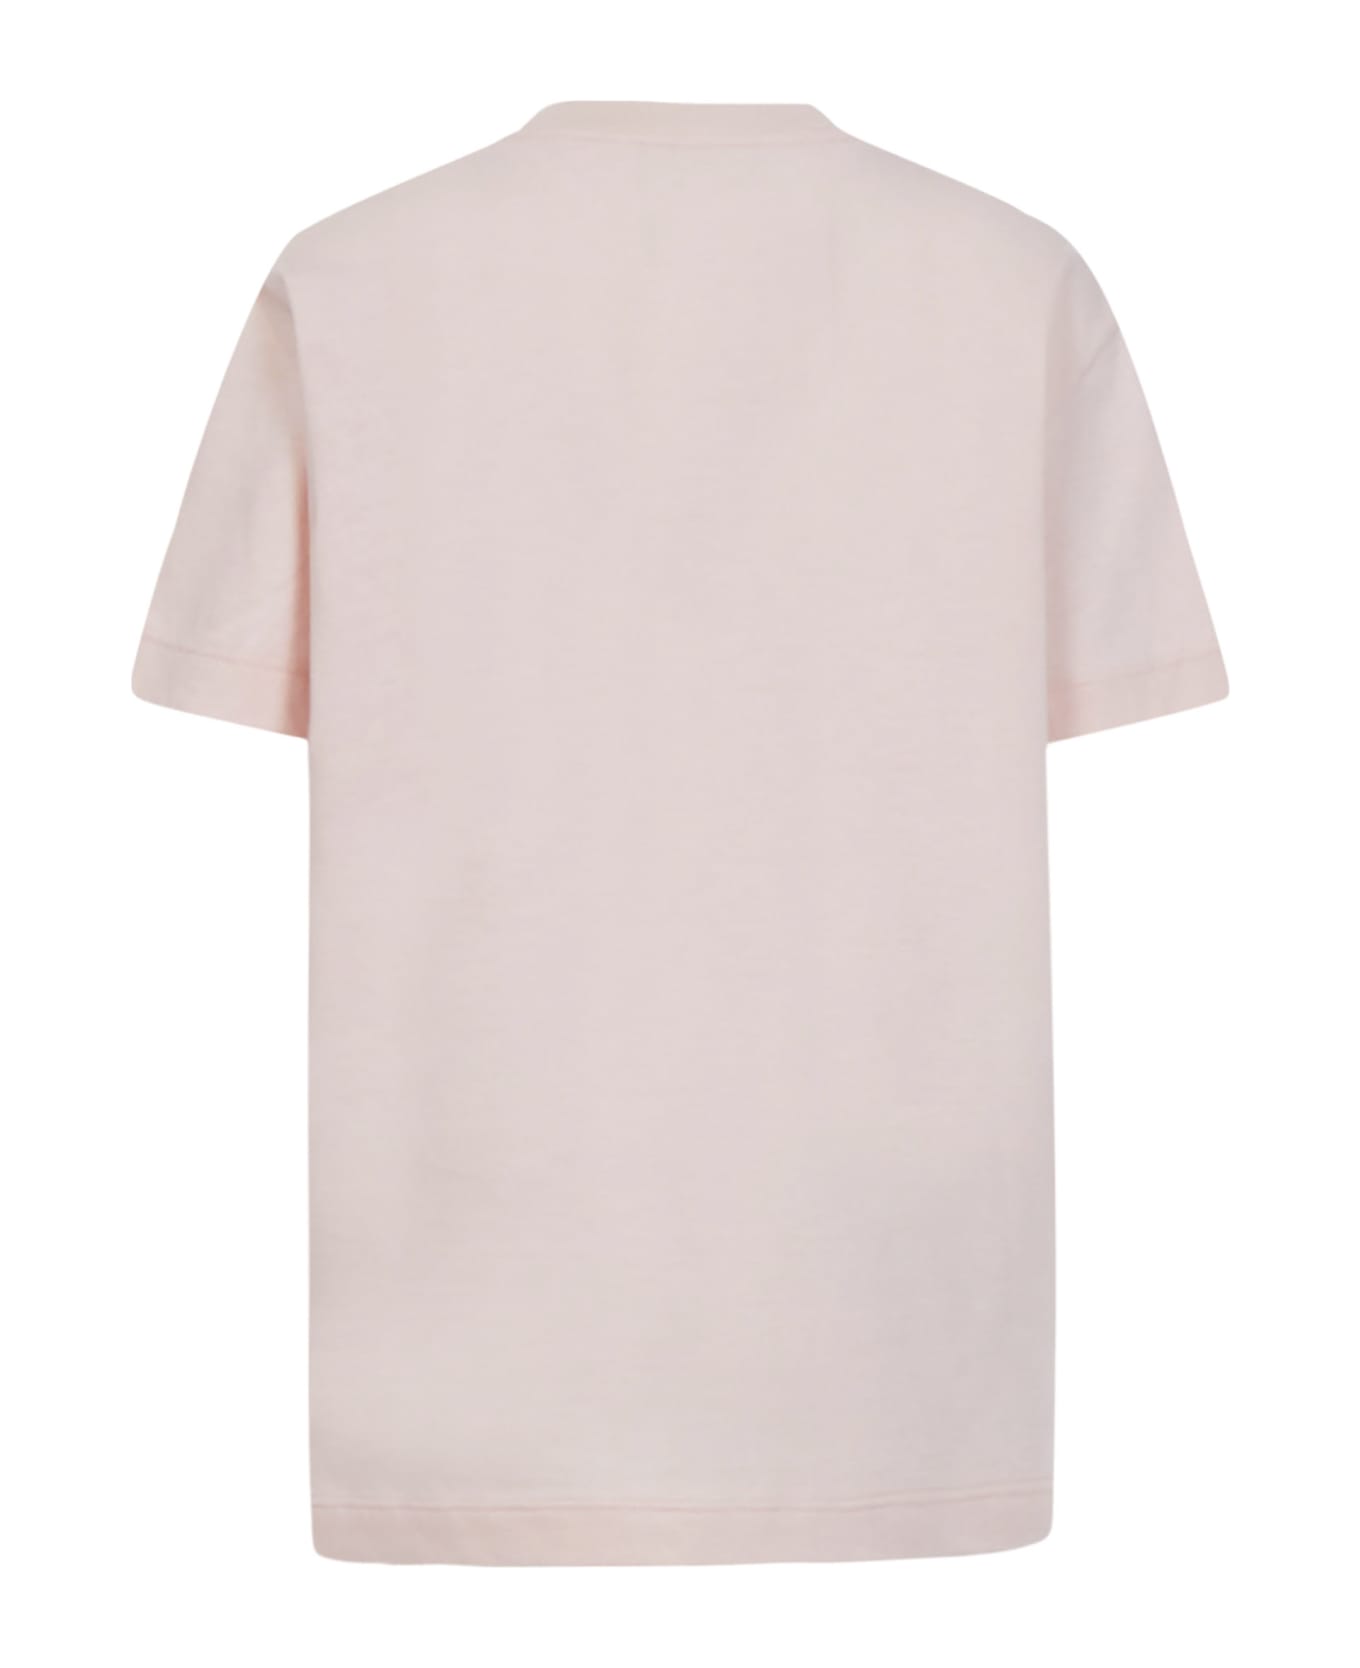 Fendi T-shirt - Pink